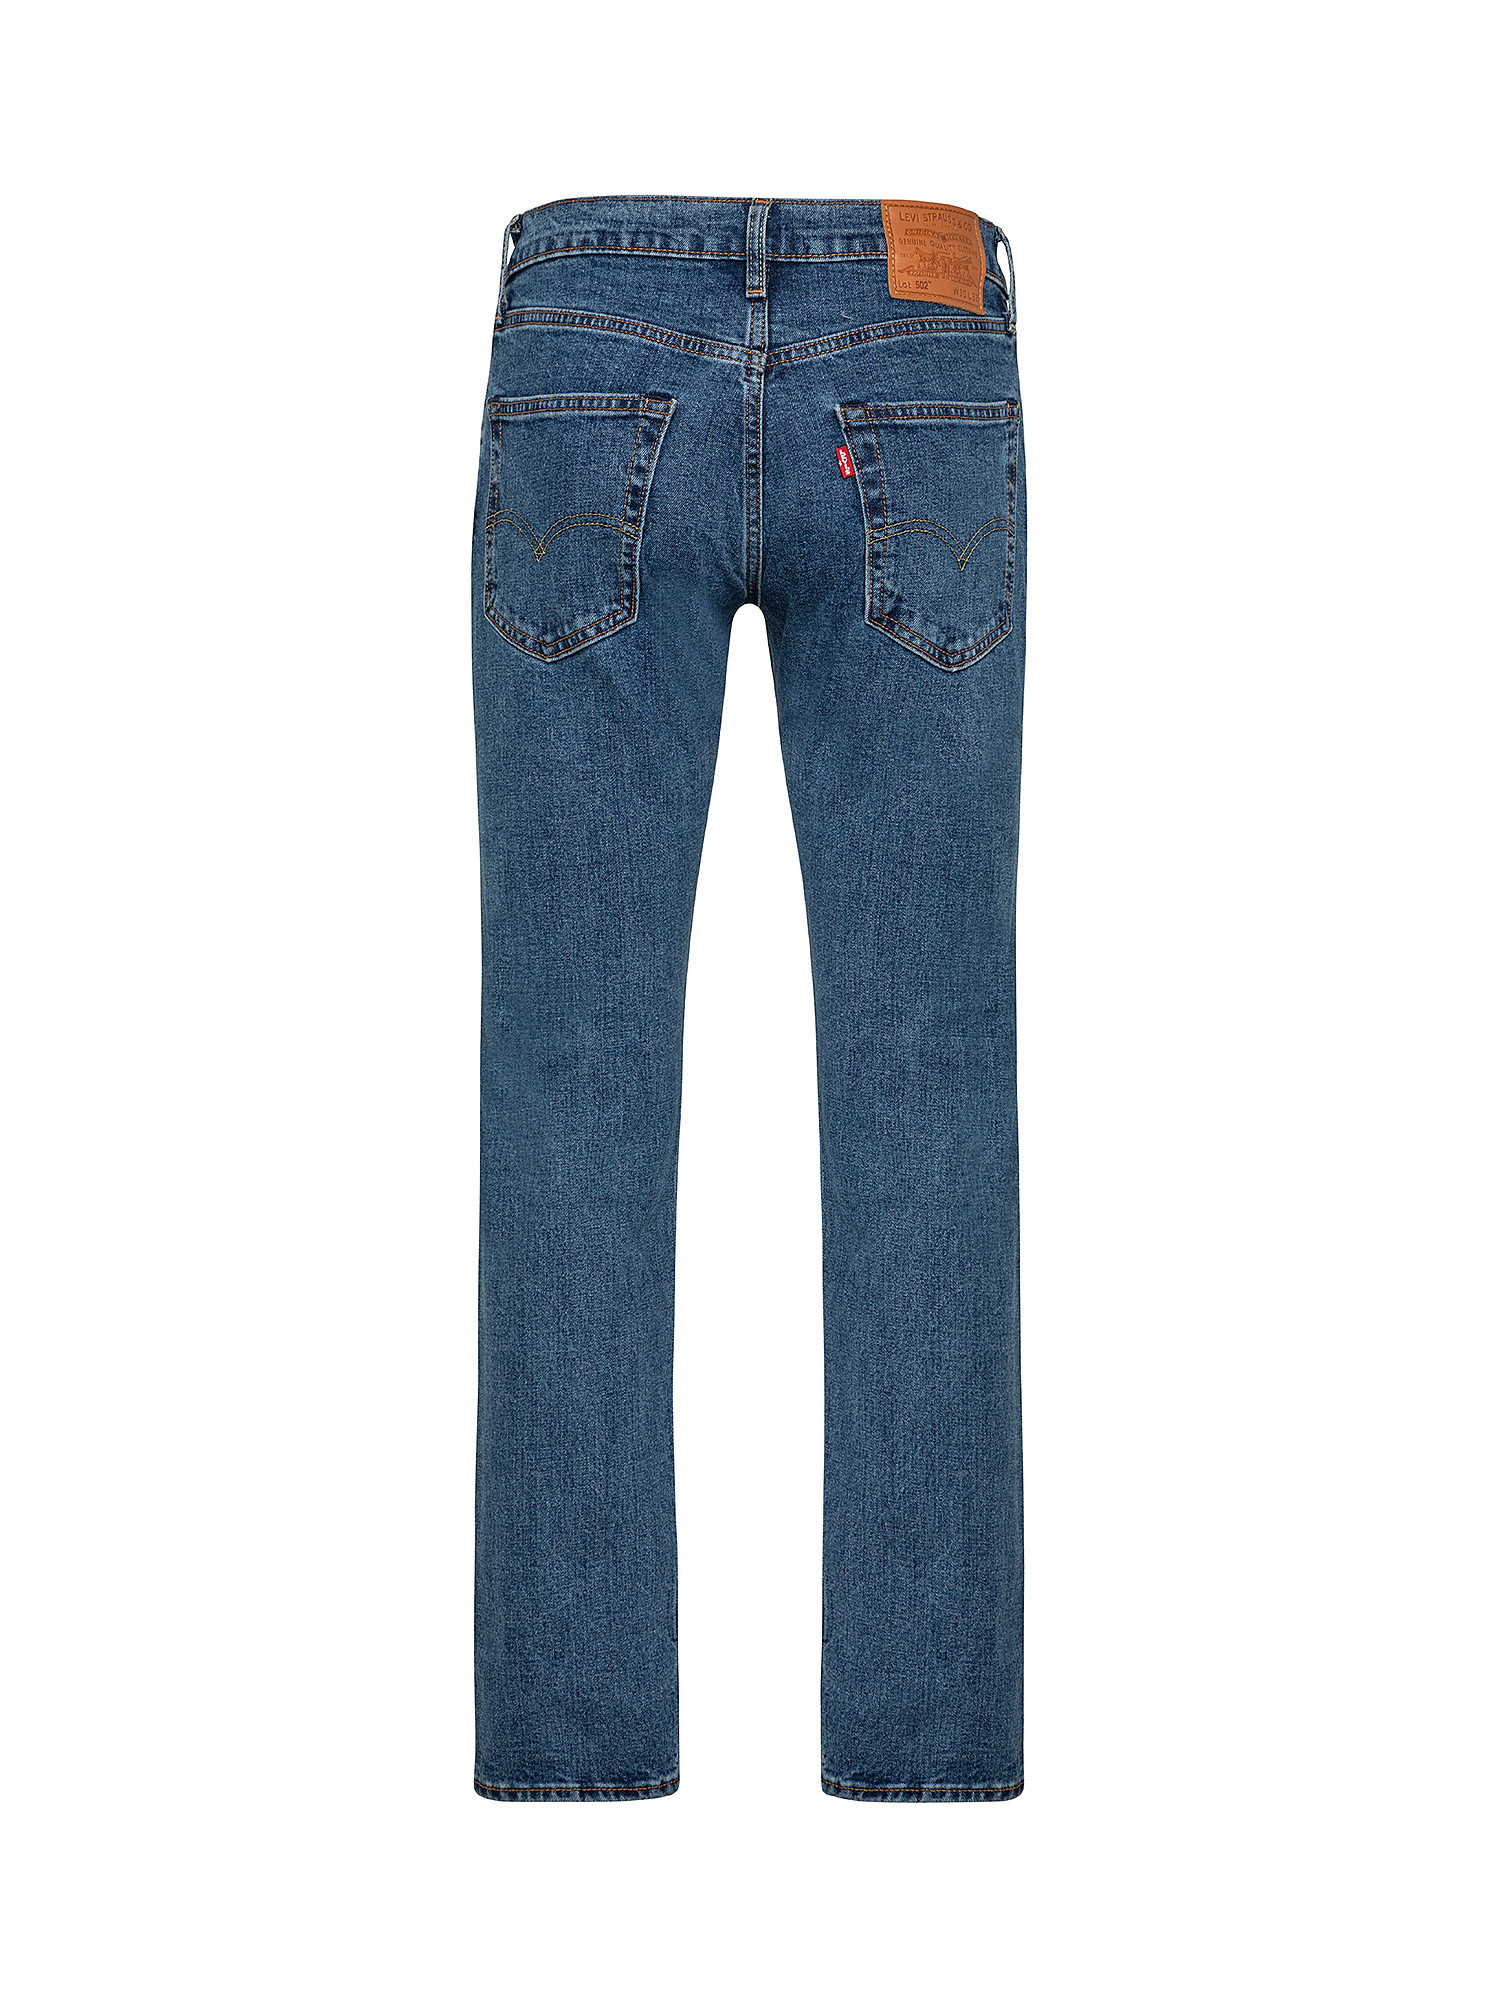 Jeans cinque tasche, Blu, large image number 1